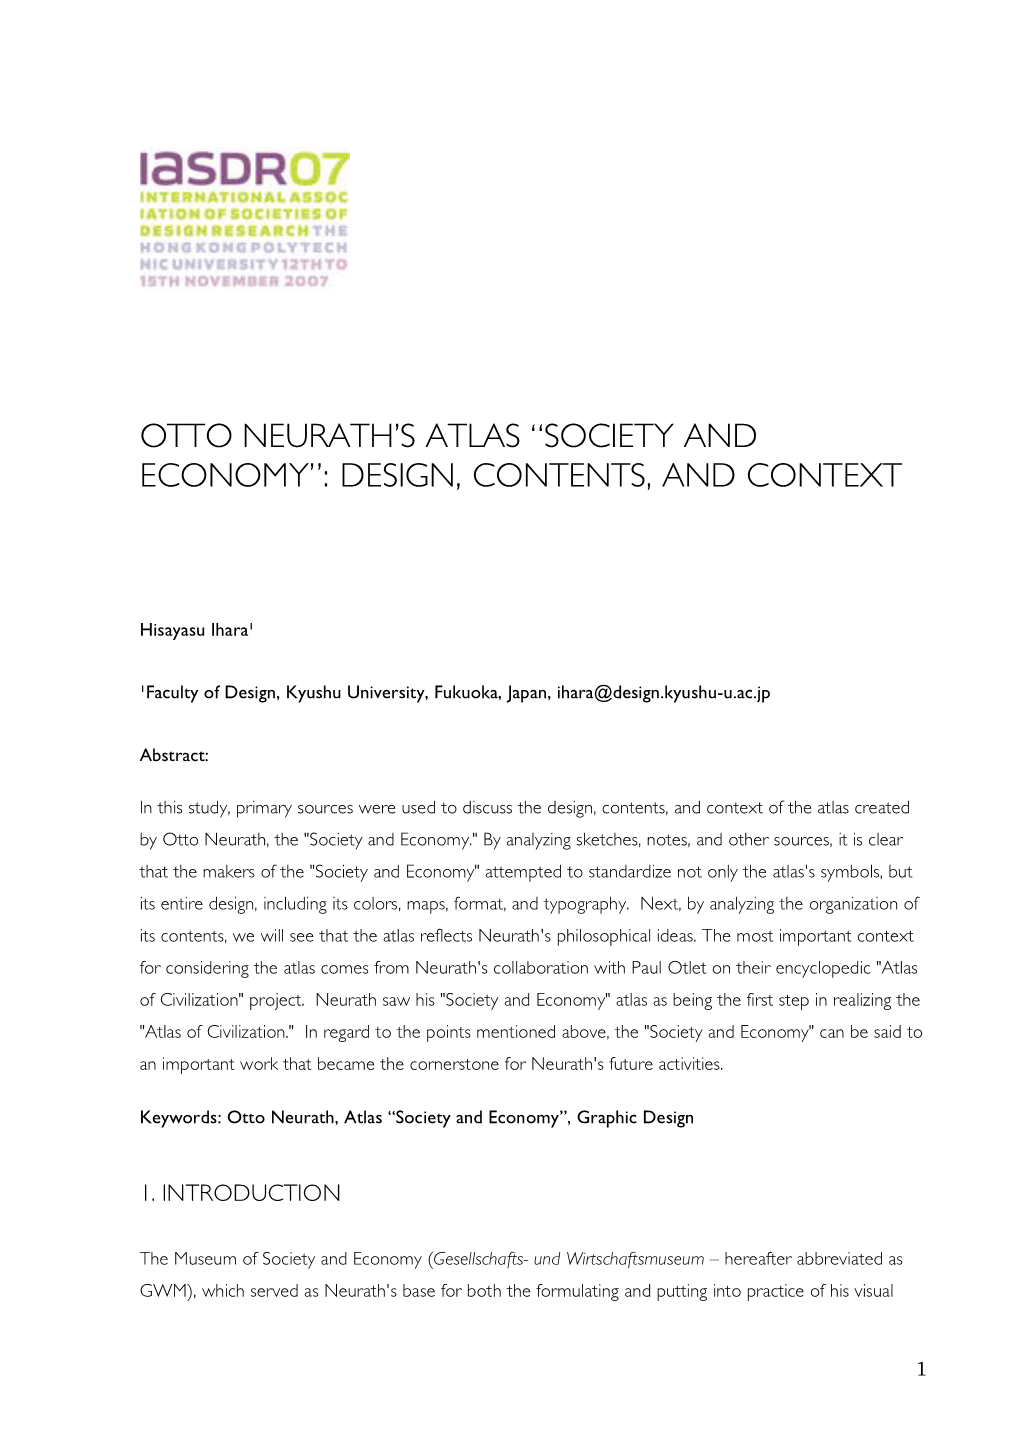 Otto Neurath's Atlas “Society and Economy”